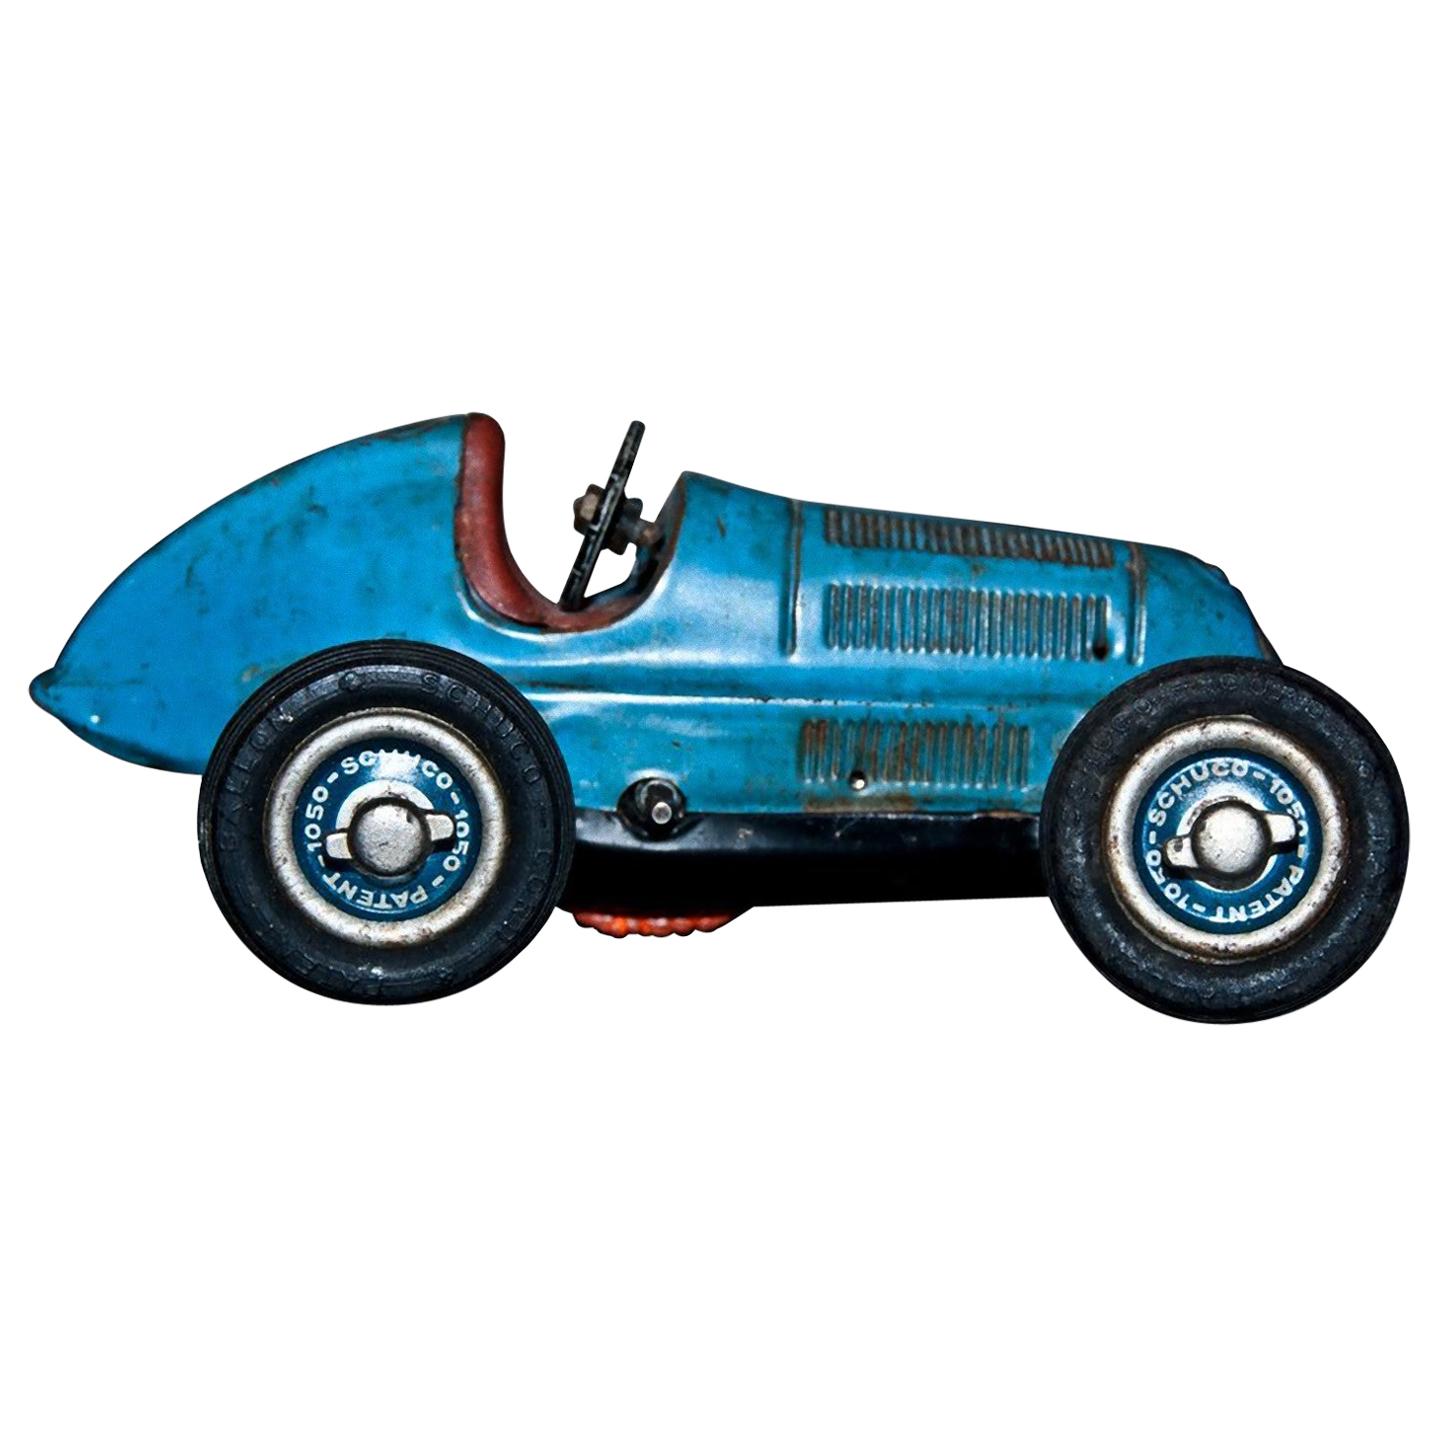 Vintage Wind Up Toy Car, Schuco Studio 1050 Car